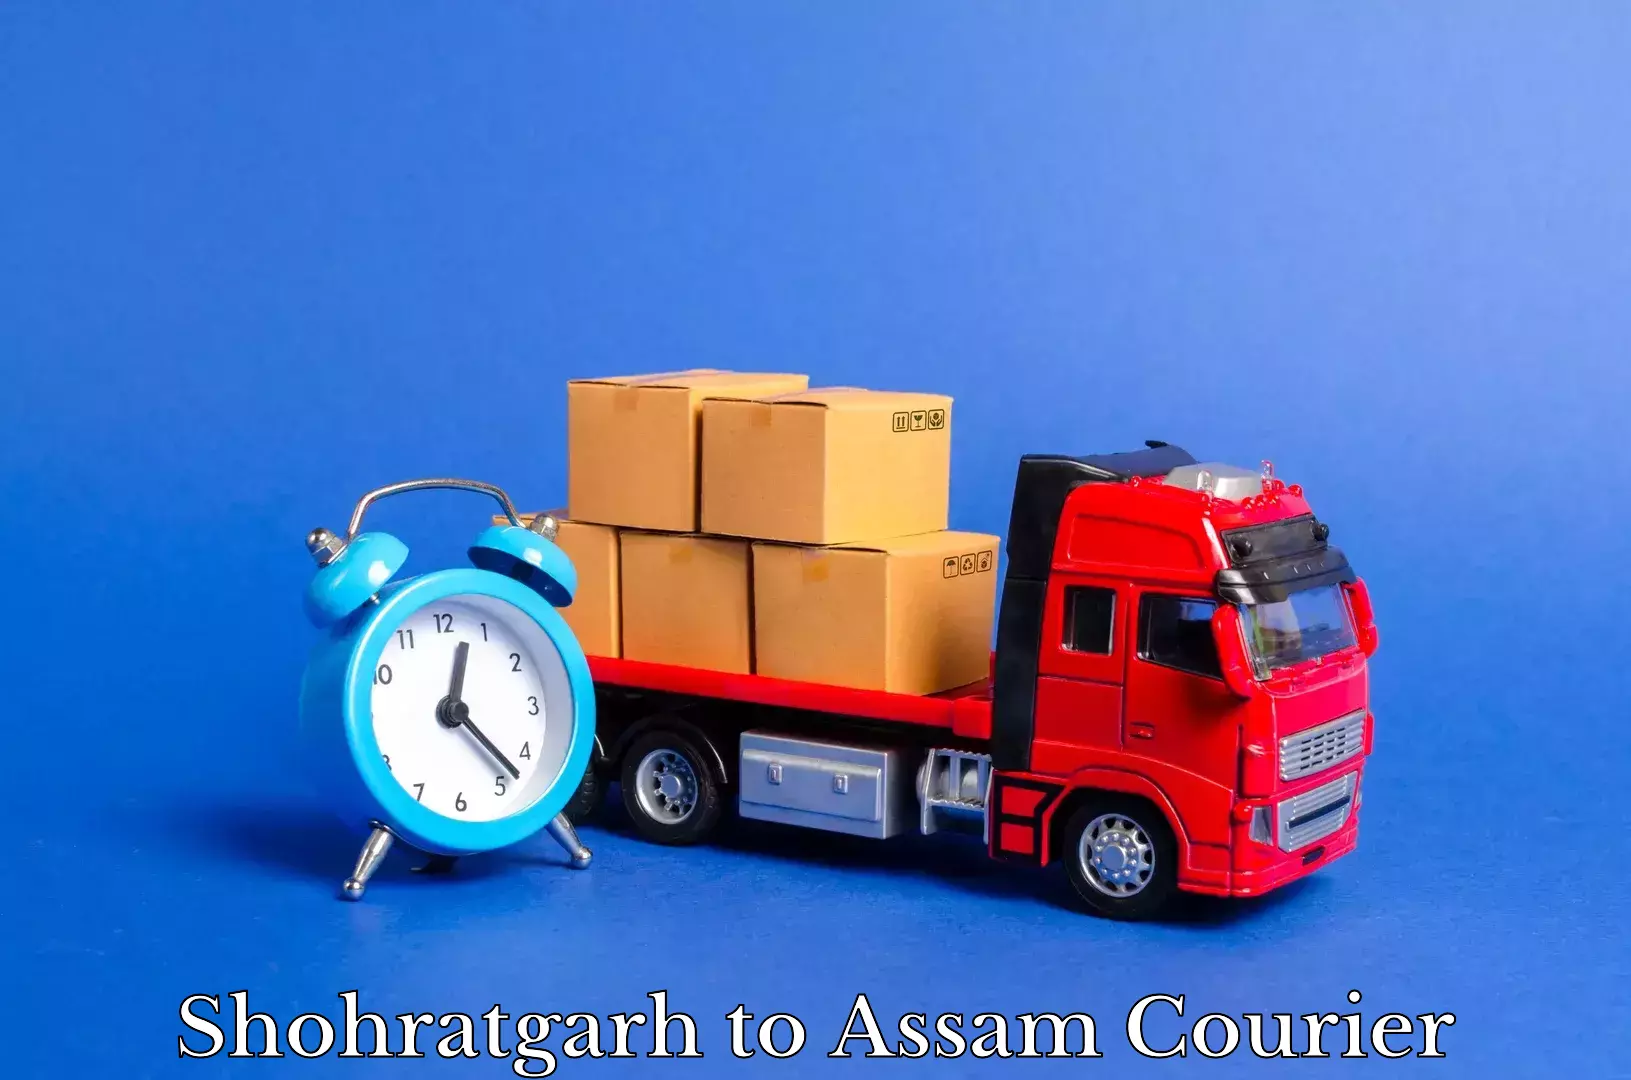 Trusted moving company Shohratgarh to Assam